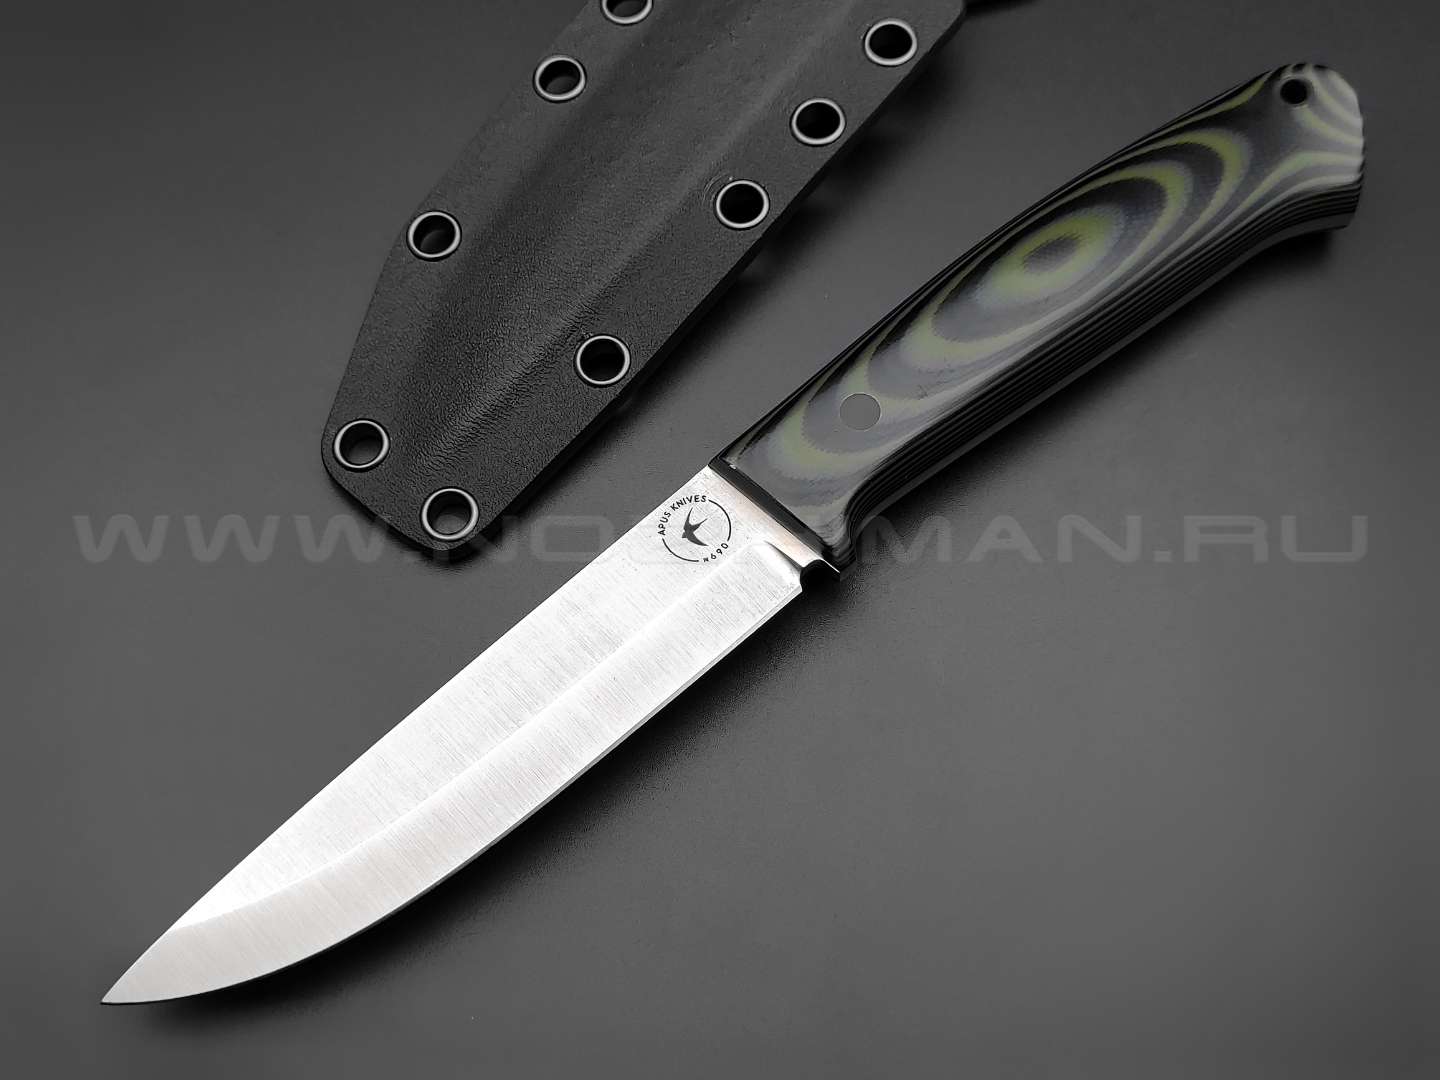 Apus Knives нож Maverick сталь N690, рукоять G10 black & green